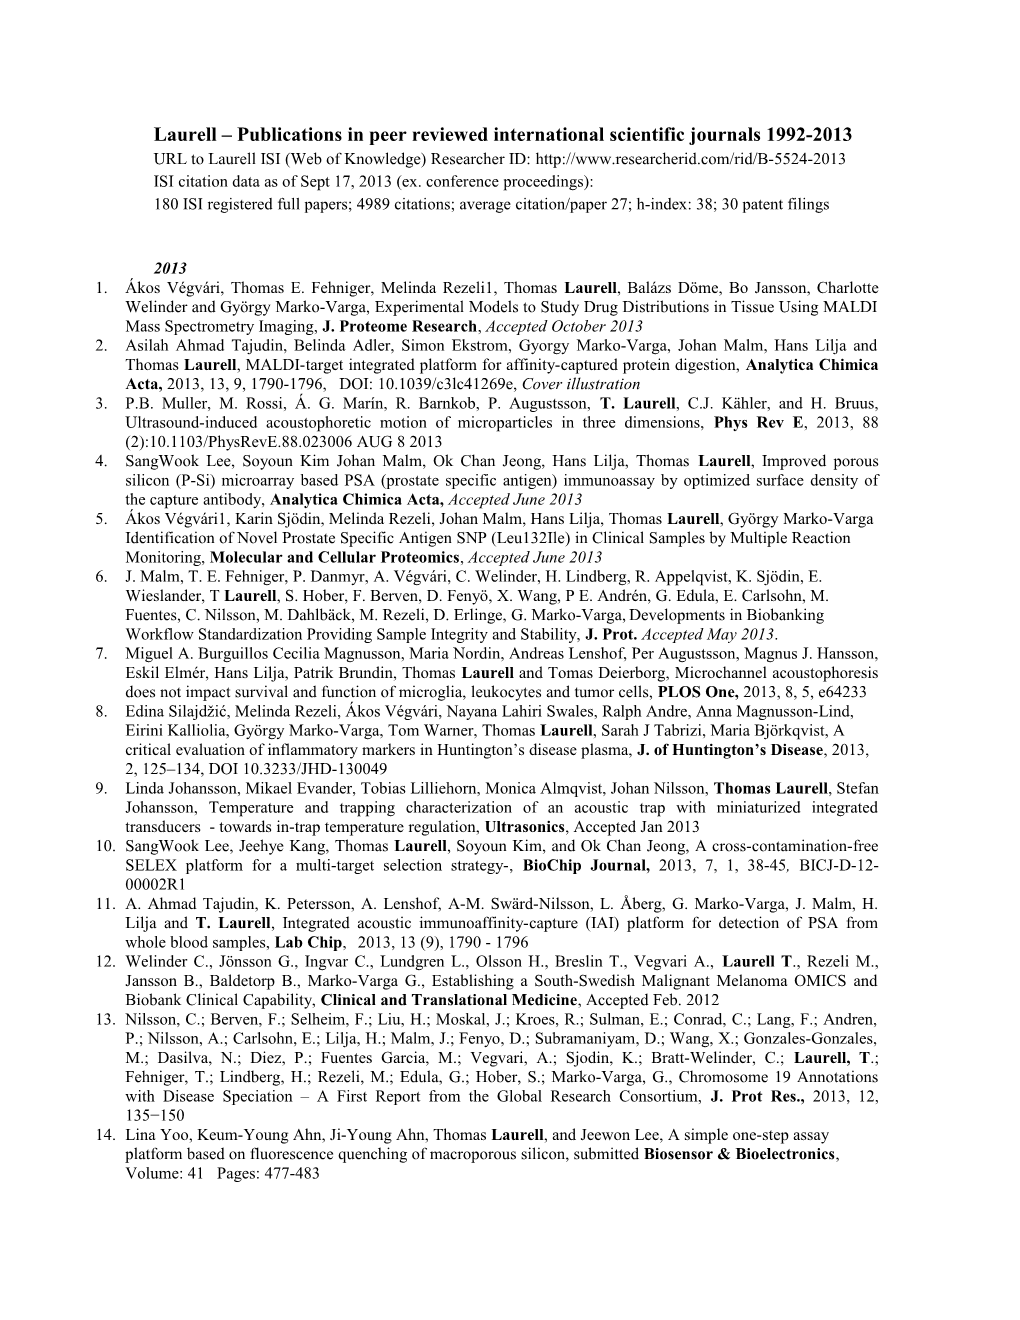 Laurell Publications in Peer Reviewed International Scientific Journals 1997-2004